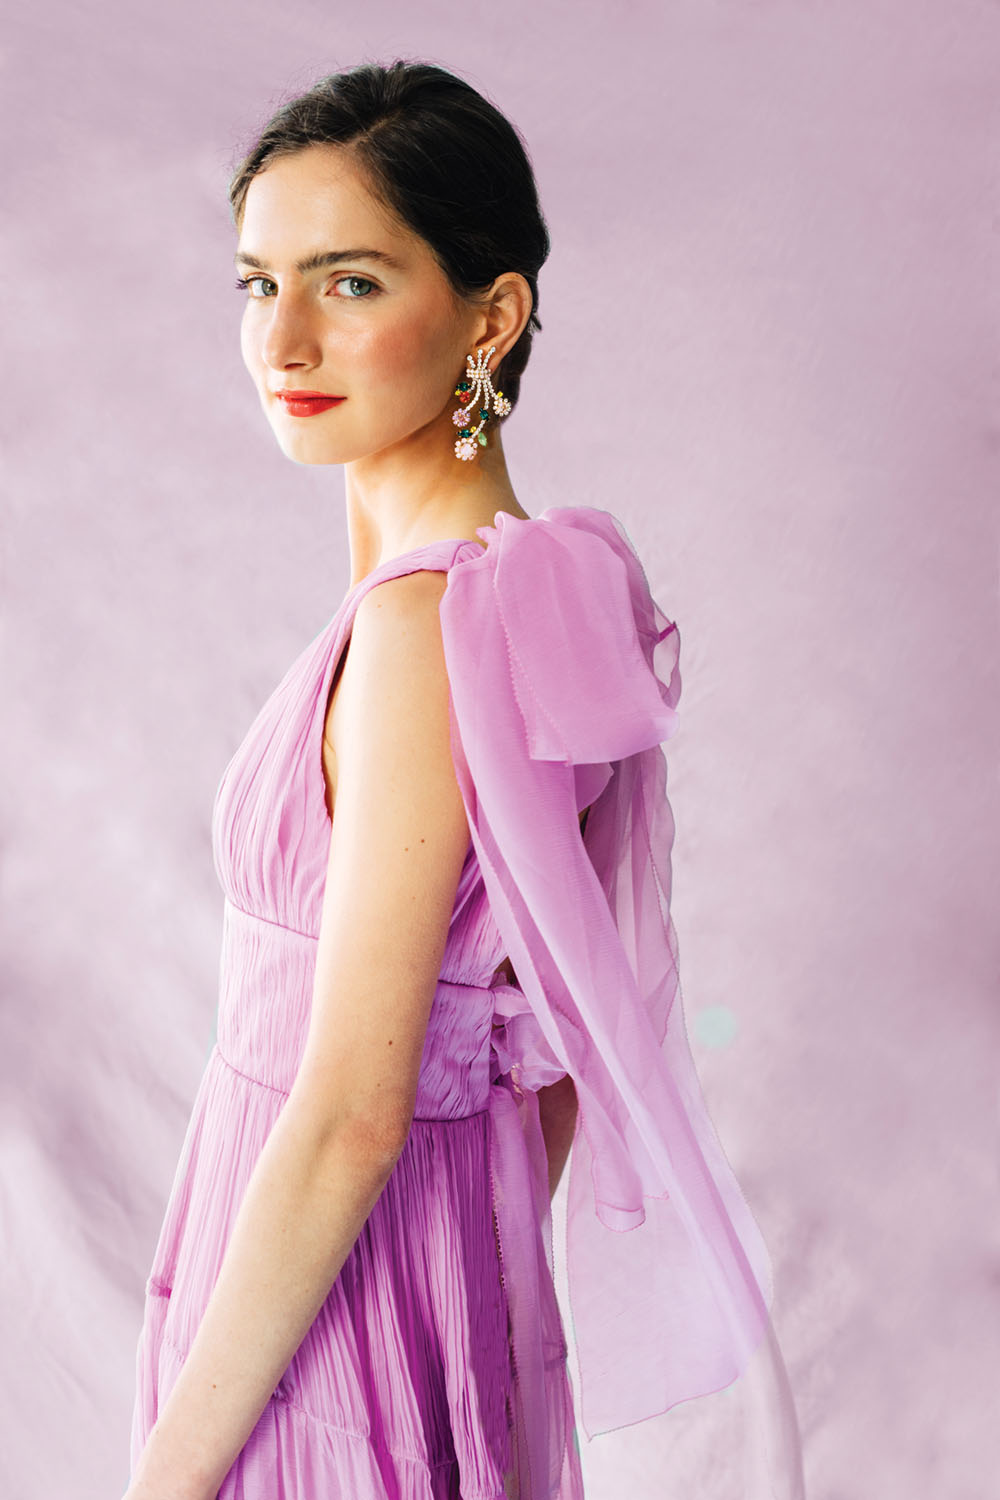 bejeweled floral earrings worn by a model in an elegant chiffon lavender dress